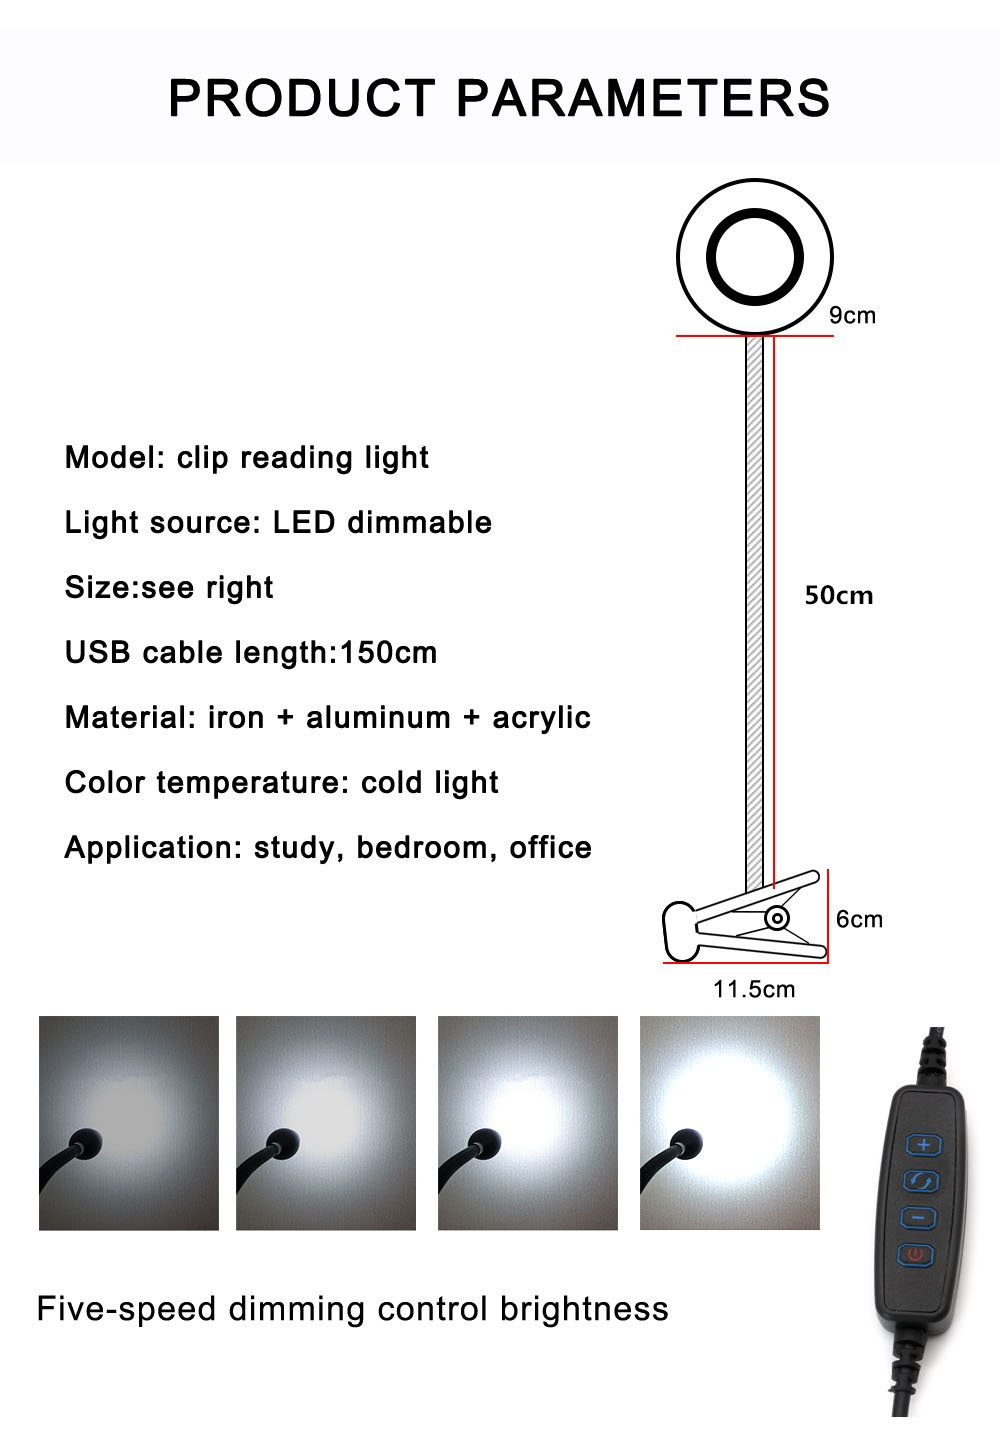 ZEROUNO-LED-Book-Lamp-Clip-Reading-Light-USB-Power-Black-Flexible-Hose-Table-Desk-Headboard-Home-Stu-1809504-6